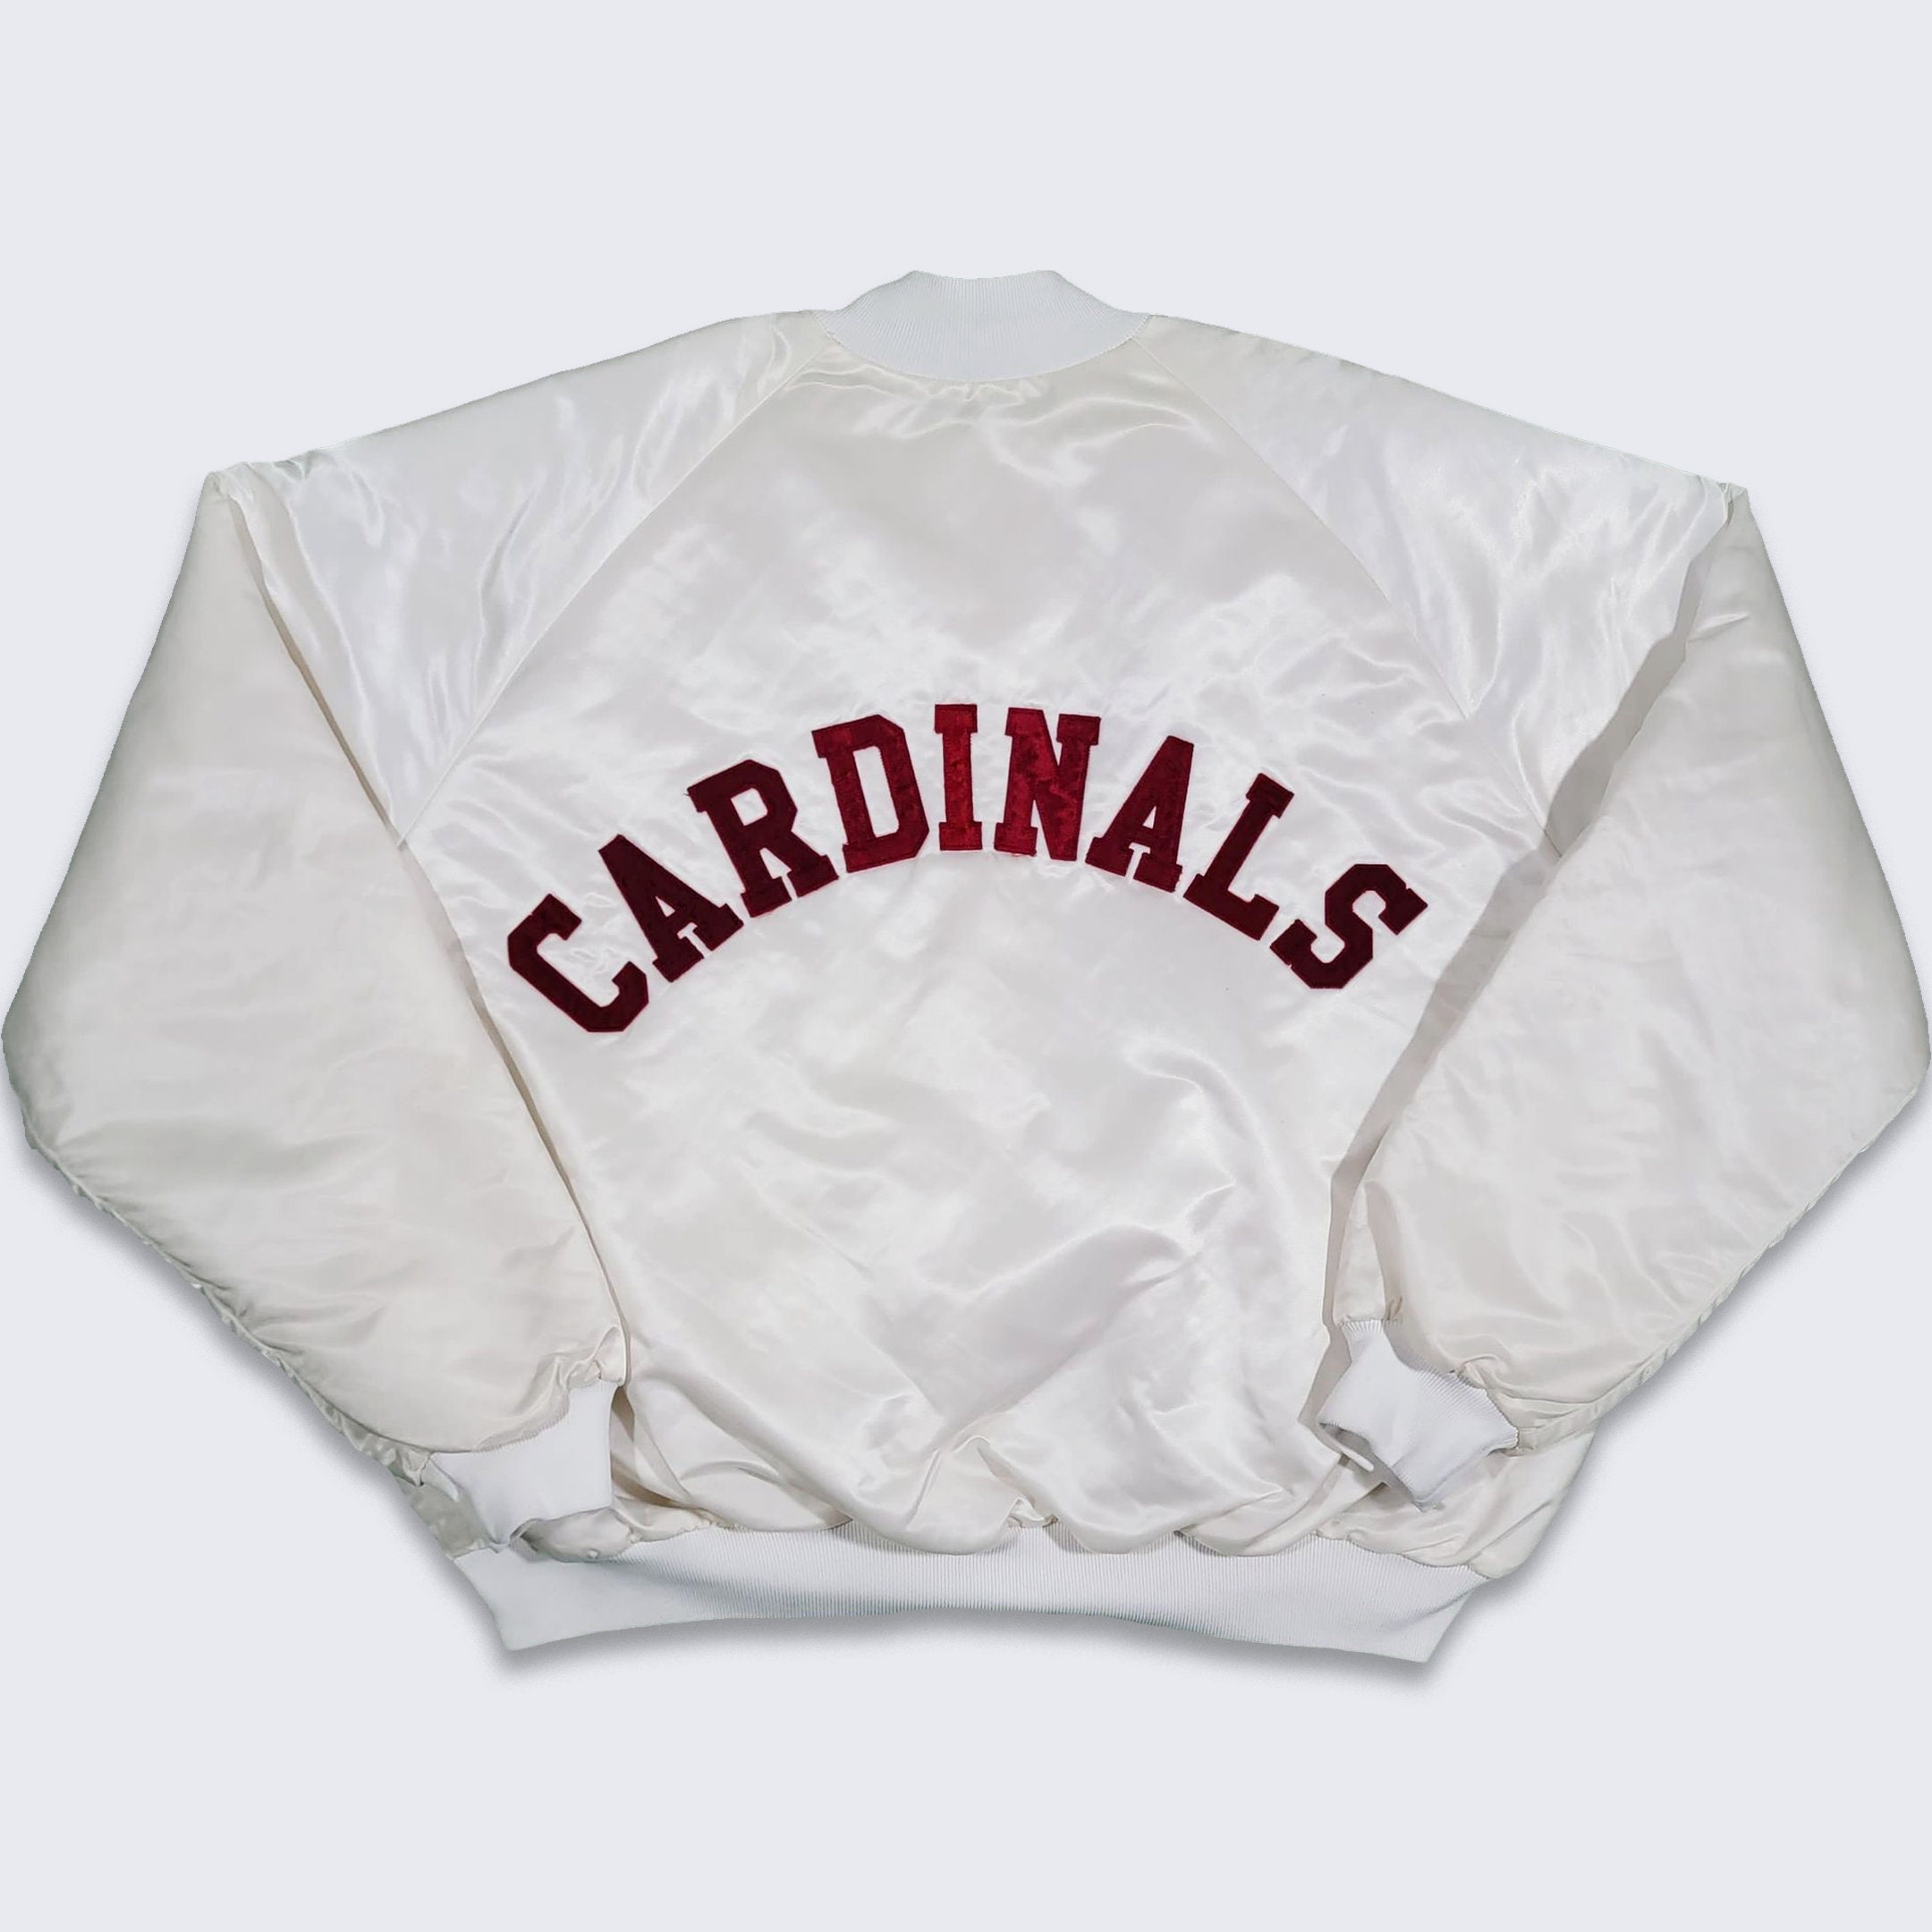 Vintage Louisville Cardinals Jacket Mens XL Satin Snap Bomber